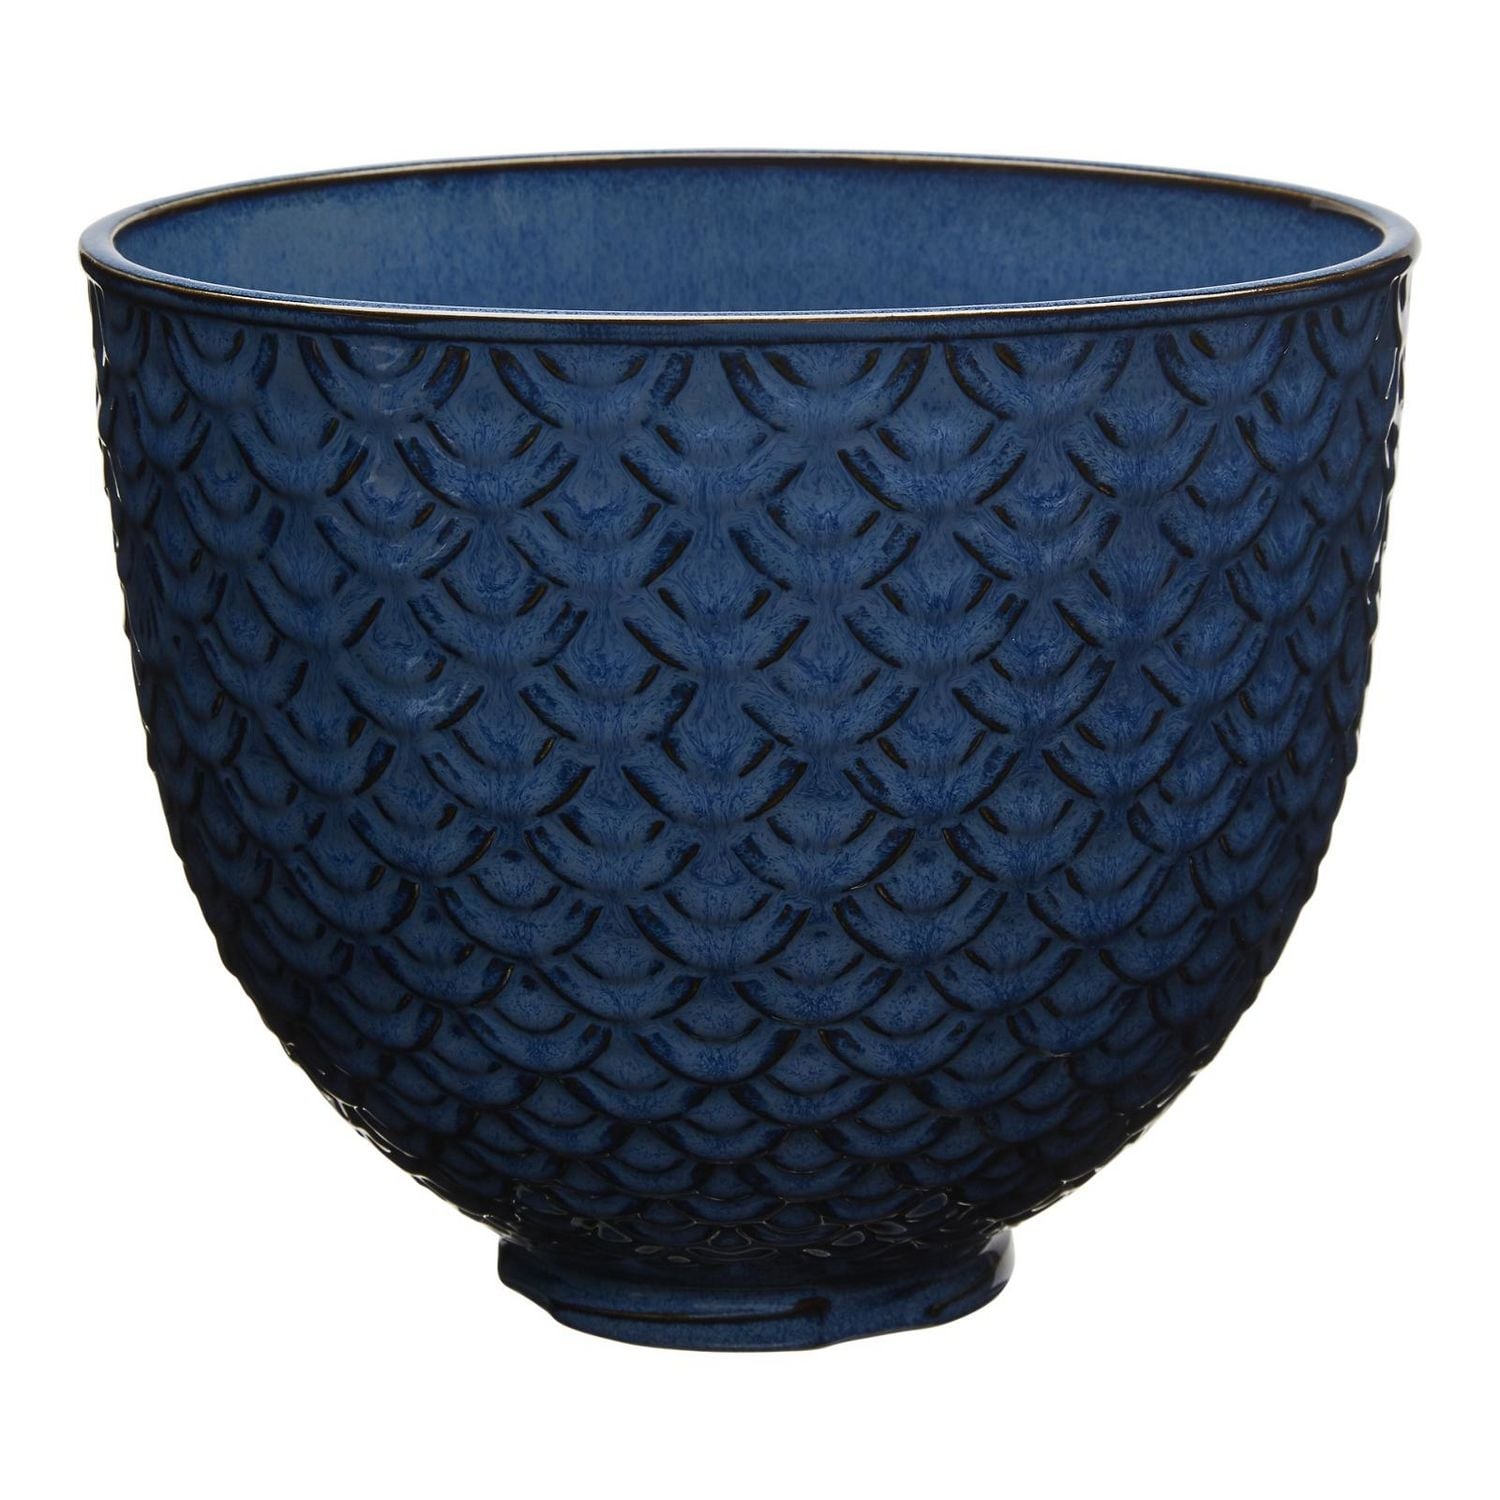 https://ak1.ostkcdn.com/images/products/is/images/direct/40871c297bee626009908880d3f78b53631bdc89/KitchenAid-5-Quart-Ceramic-Bowl-Blue-Mermaid-Lace.jpg